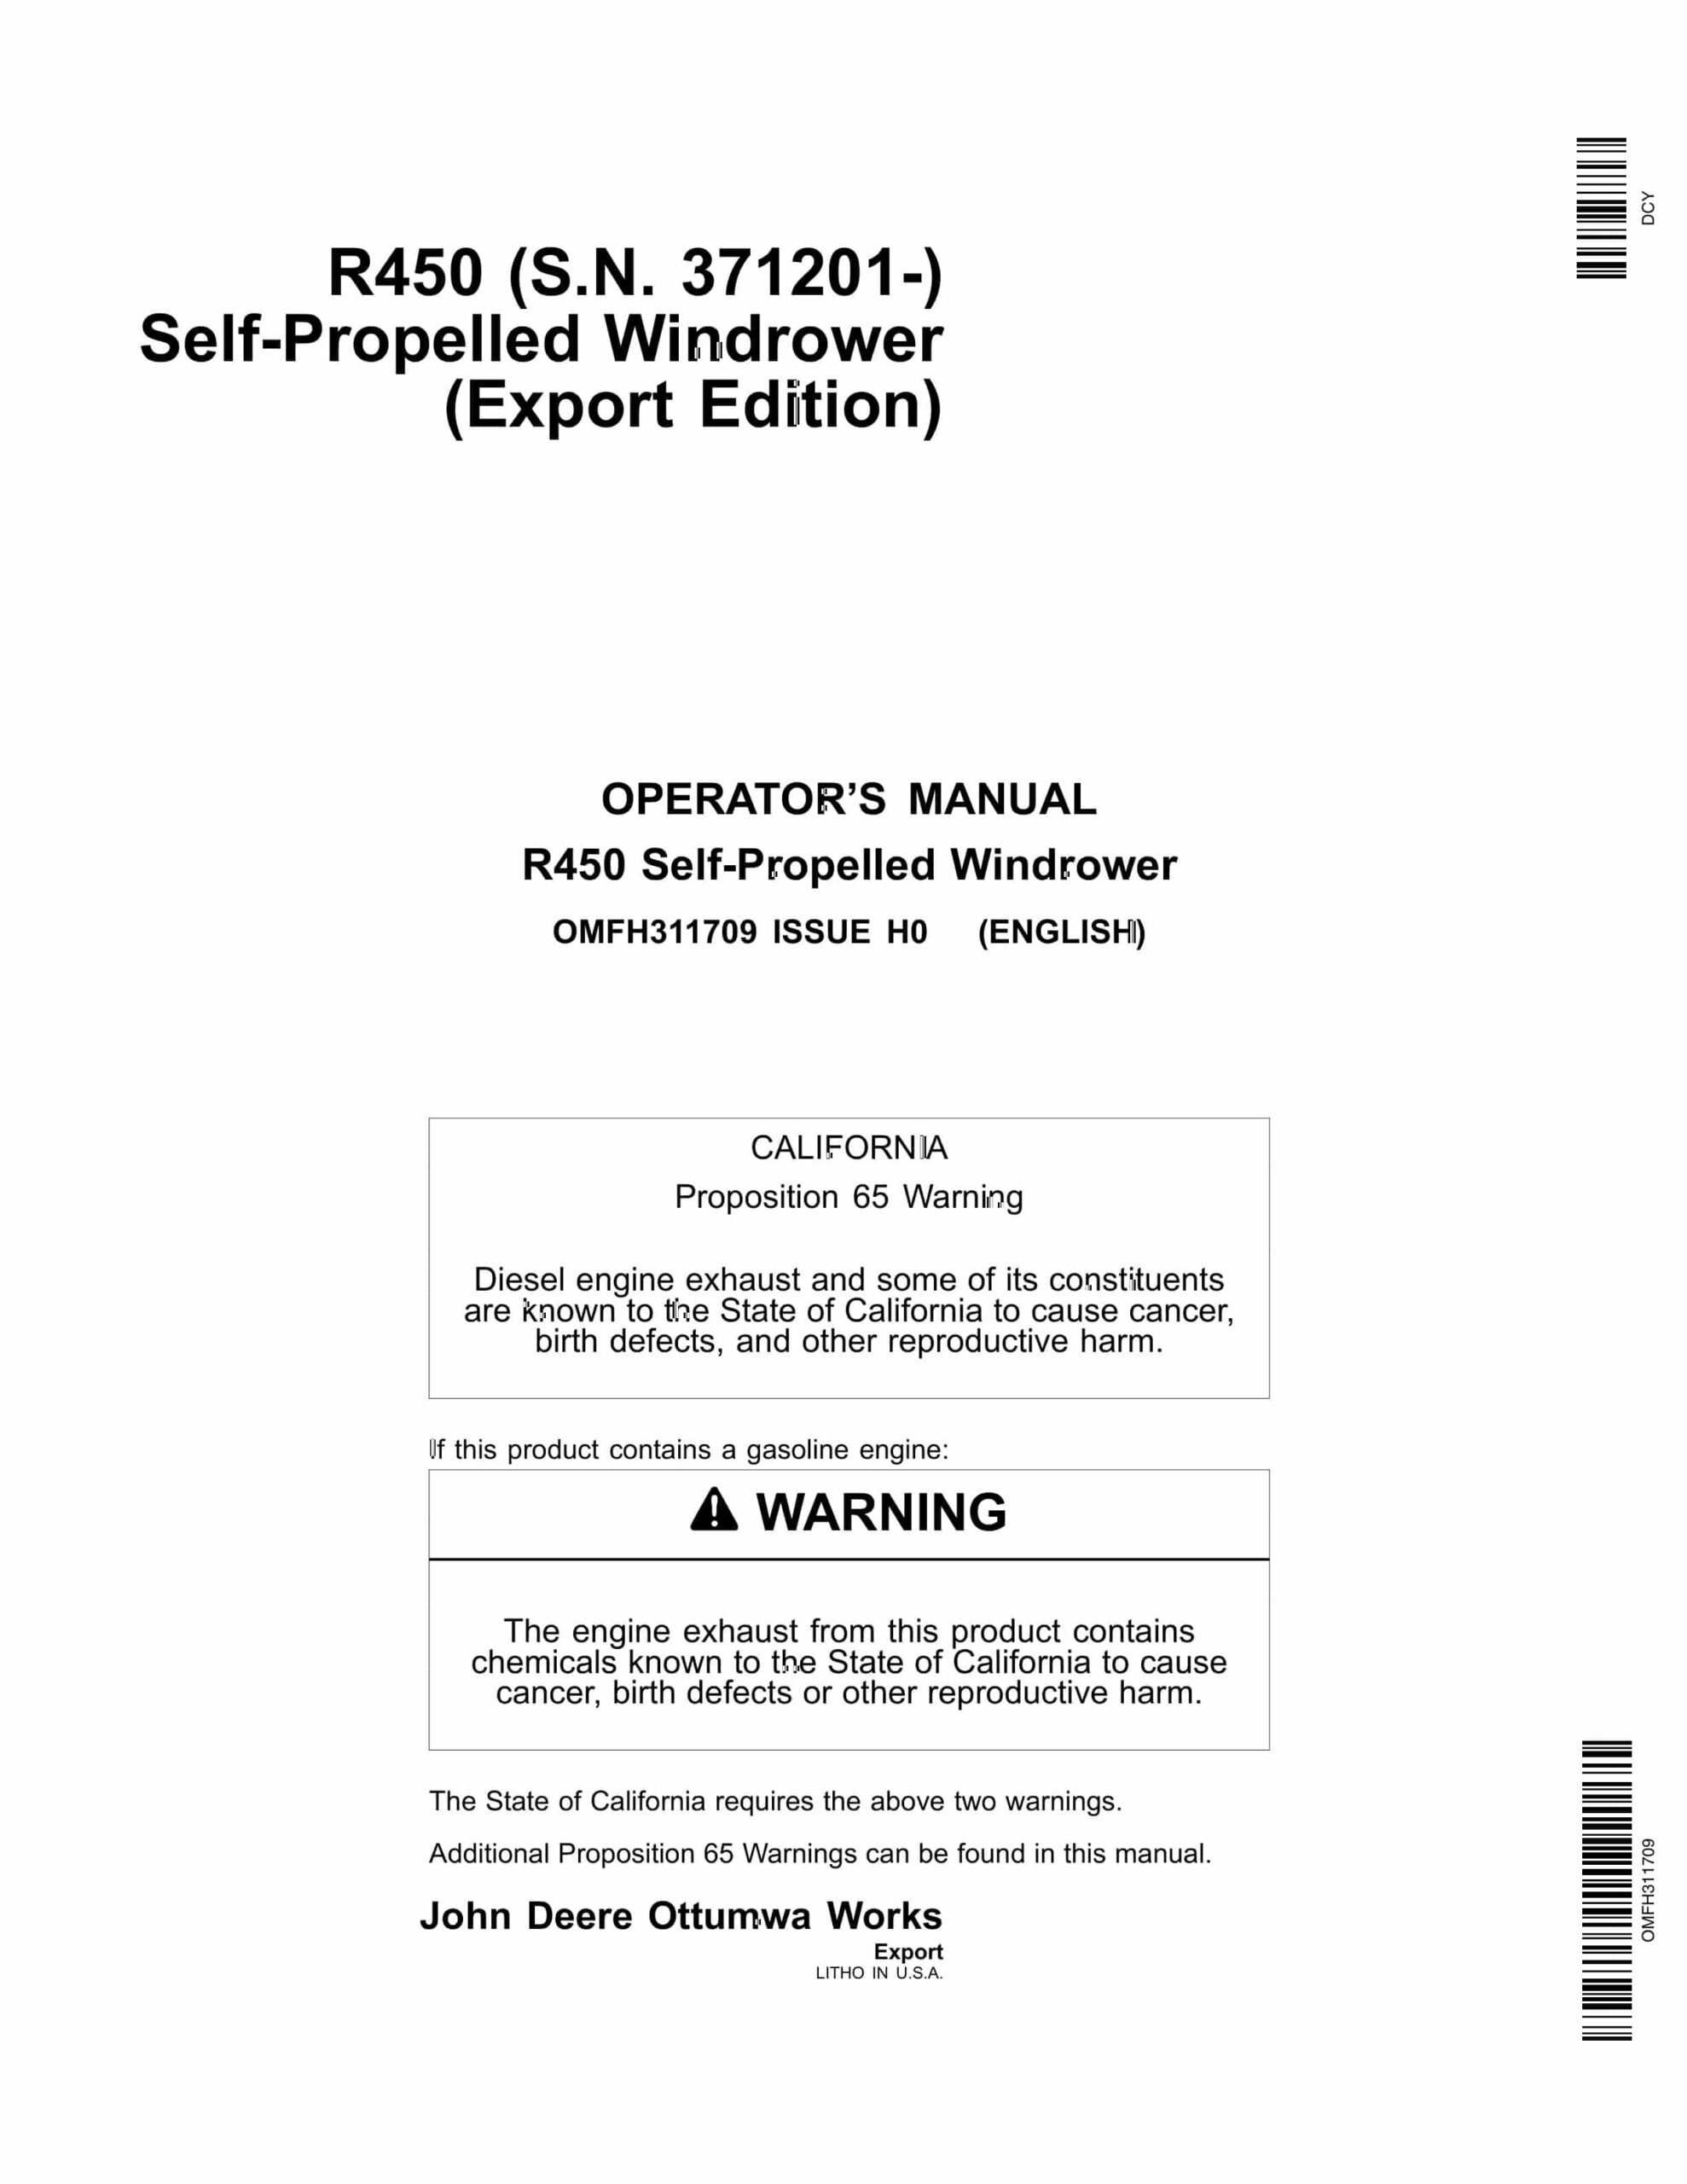 John Deere R450 Self­Propelled Windrower Operator Manual OMFH311709-1